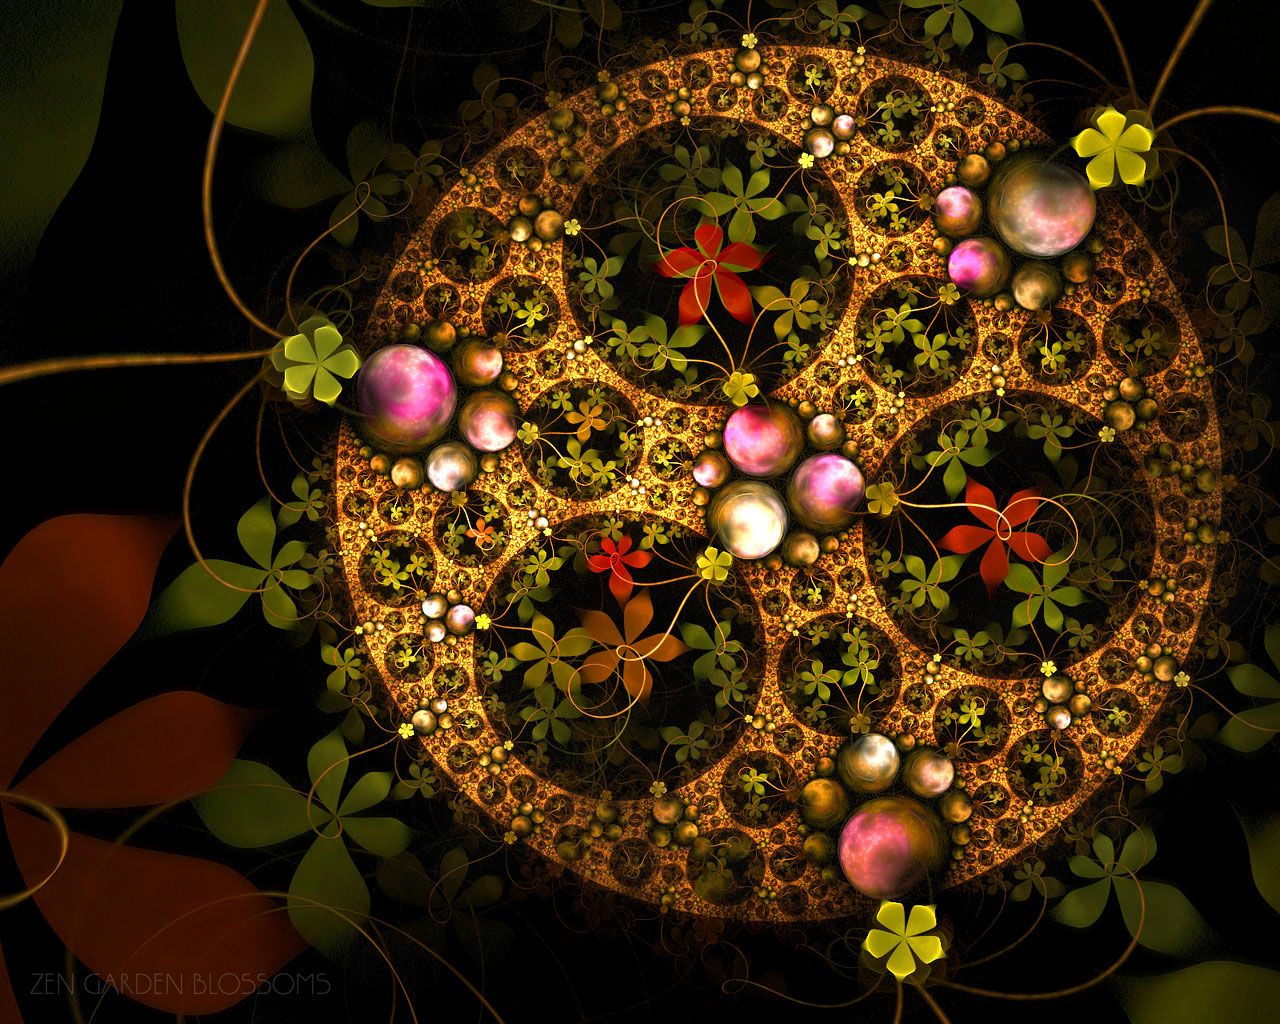 Gardens Wallpaper: Zen Garden Desktop Background, Top 22 Awesome ...